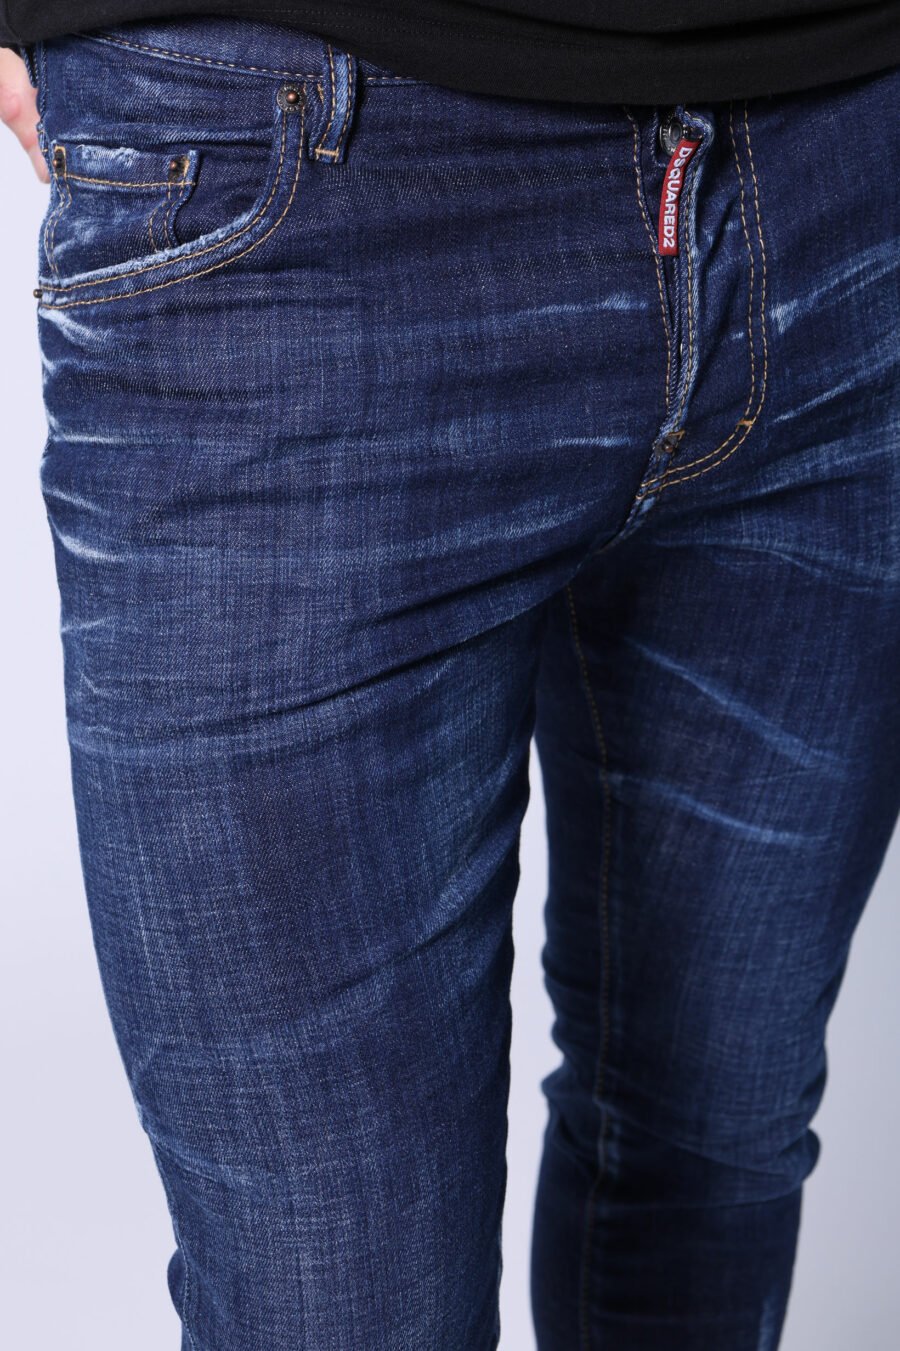 Dark blue semi frayed "skater jean" jeans - Untitled Catalog 05477